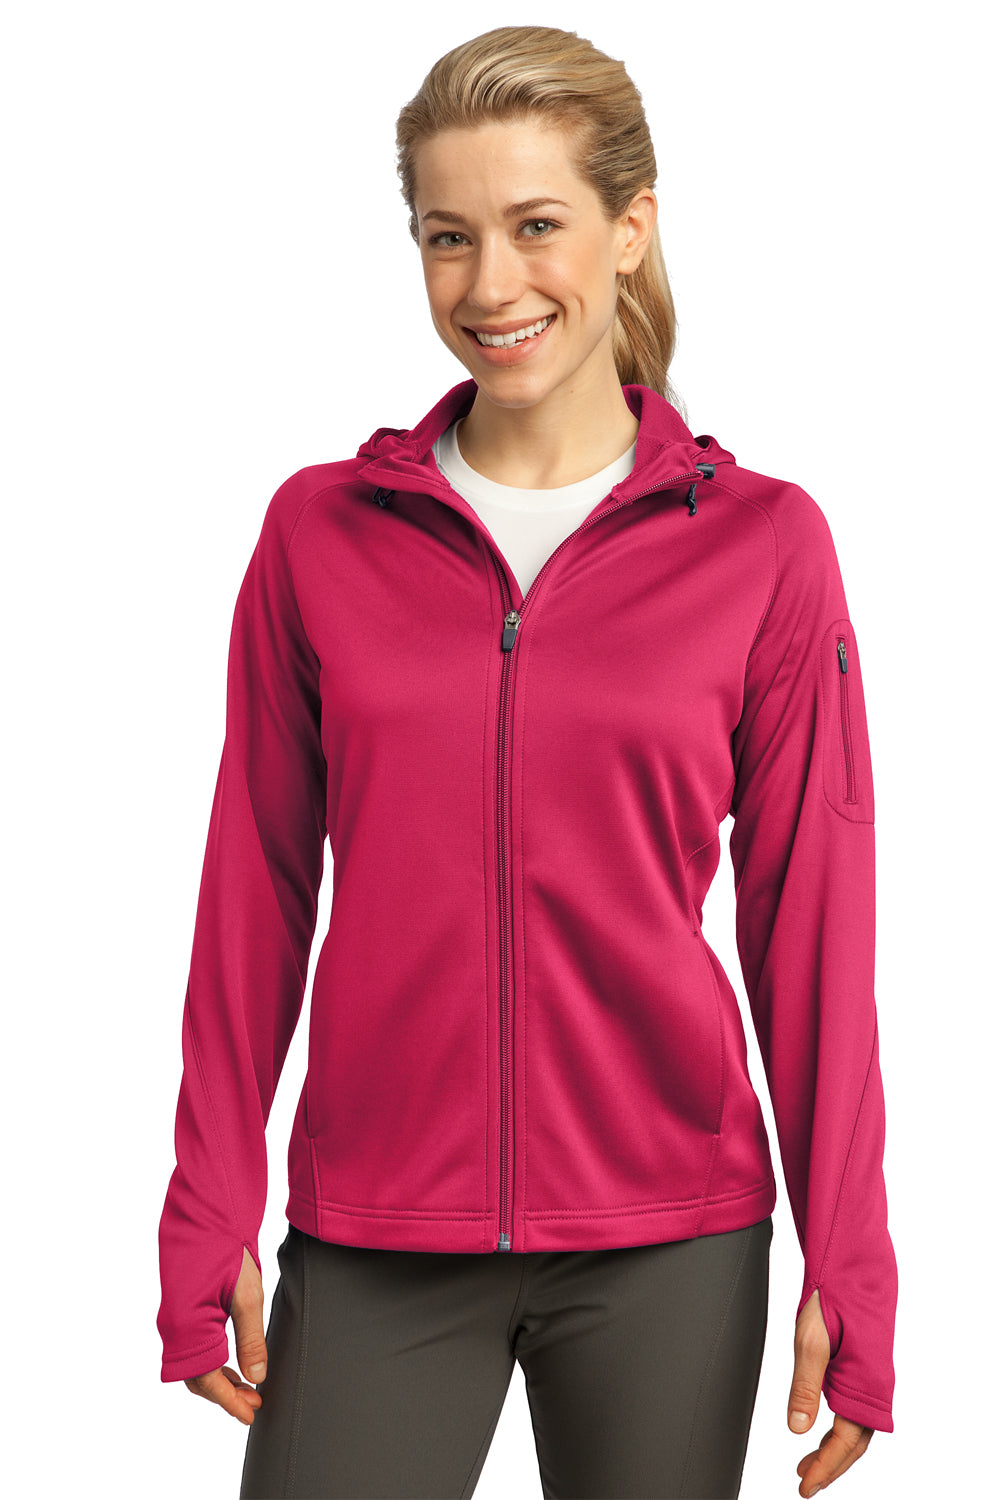 Sport-Tek L248 Womens Tech Moisture Wicking Fleece Full Zip Hooded Sweatshirt Hoodie Fuchsia Pink Front